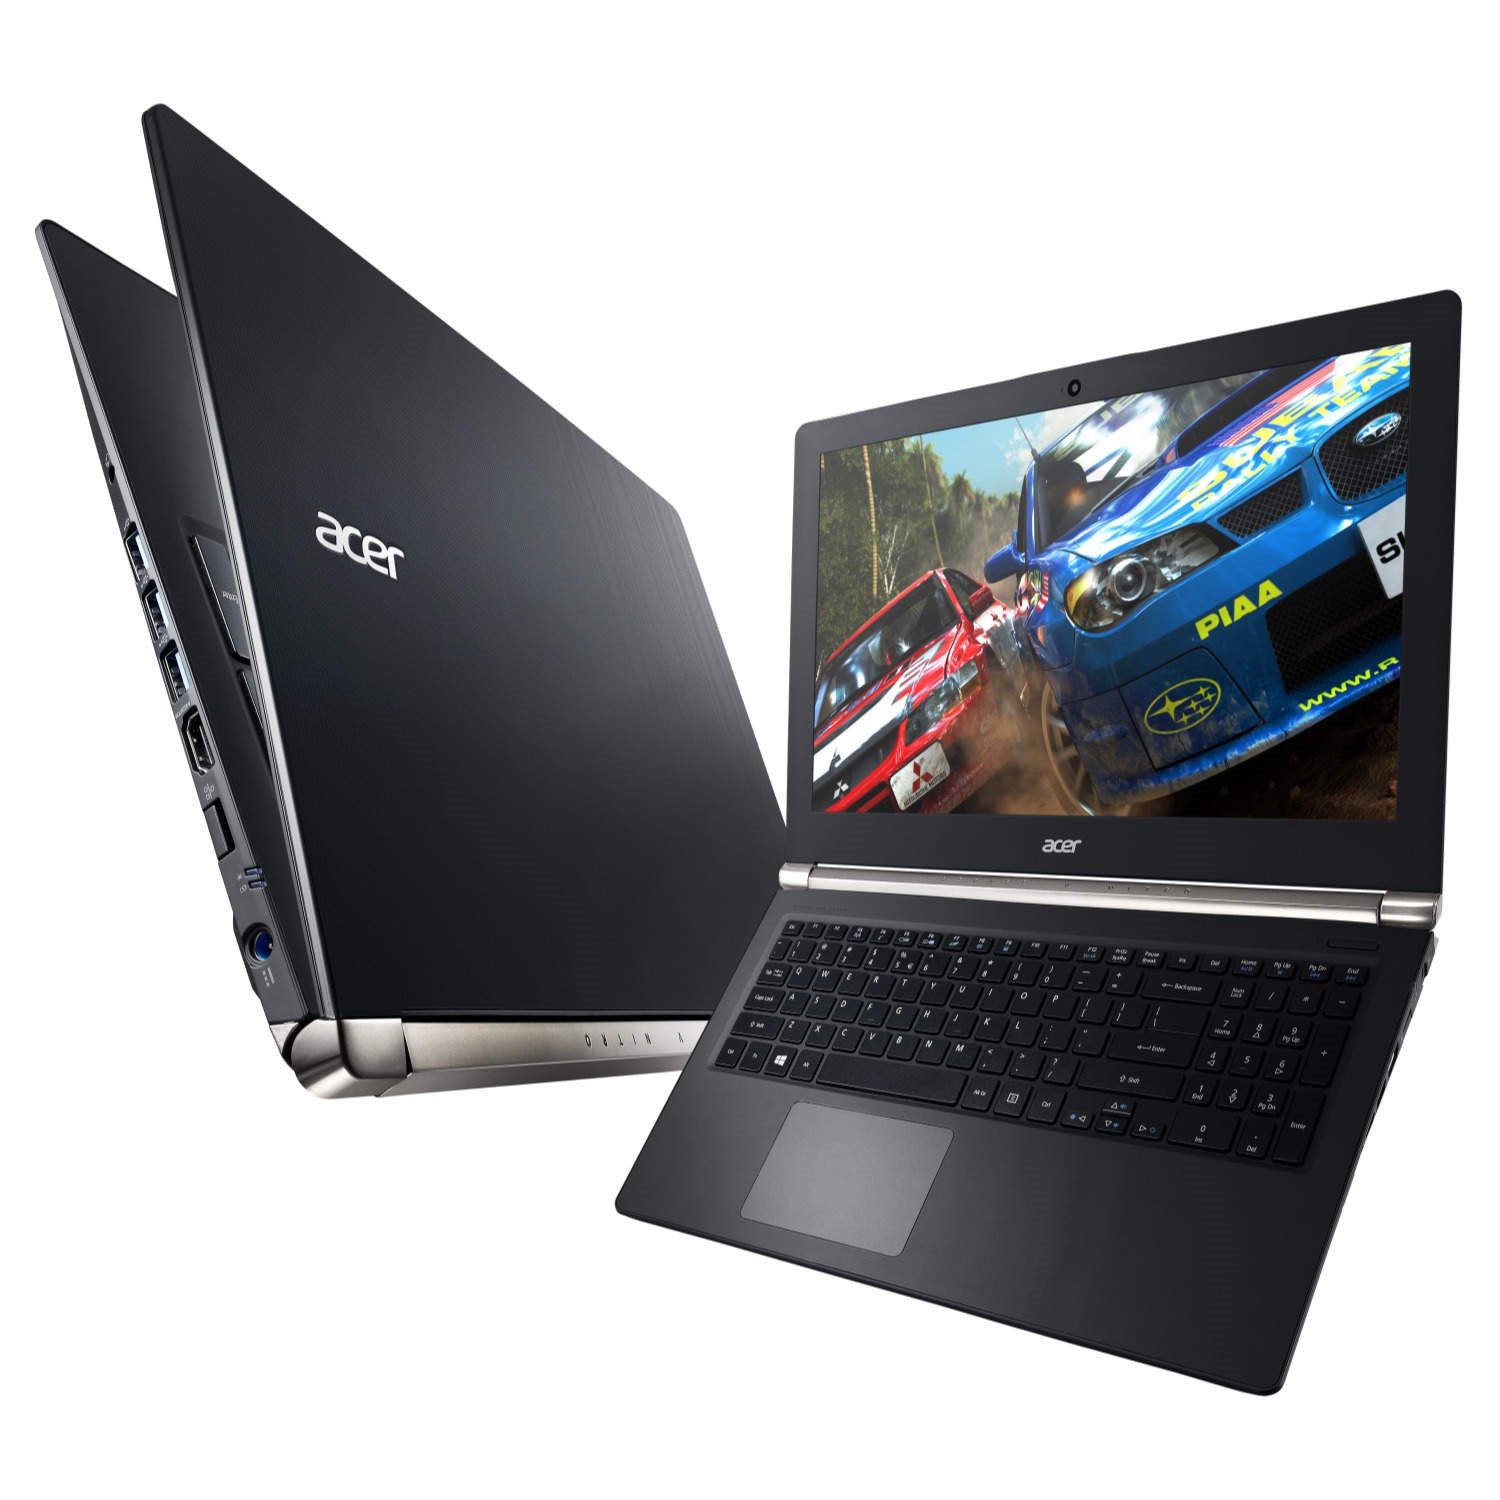 Acer Aspire V Nitro Vn7 791g Core I5 4210h 16gb 2tb 60gb Ssd 17 3 Inch Full Hd Ips Nvidia Geforce Gtx 960m 2gb Windows 8 1 Gaming Laptop Laptops Direct